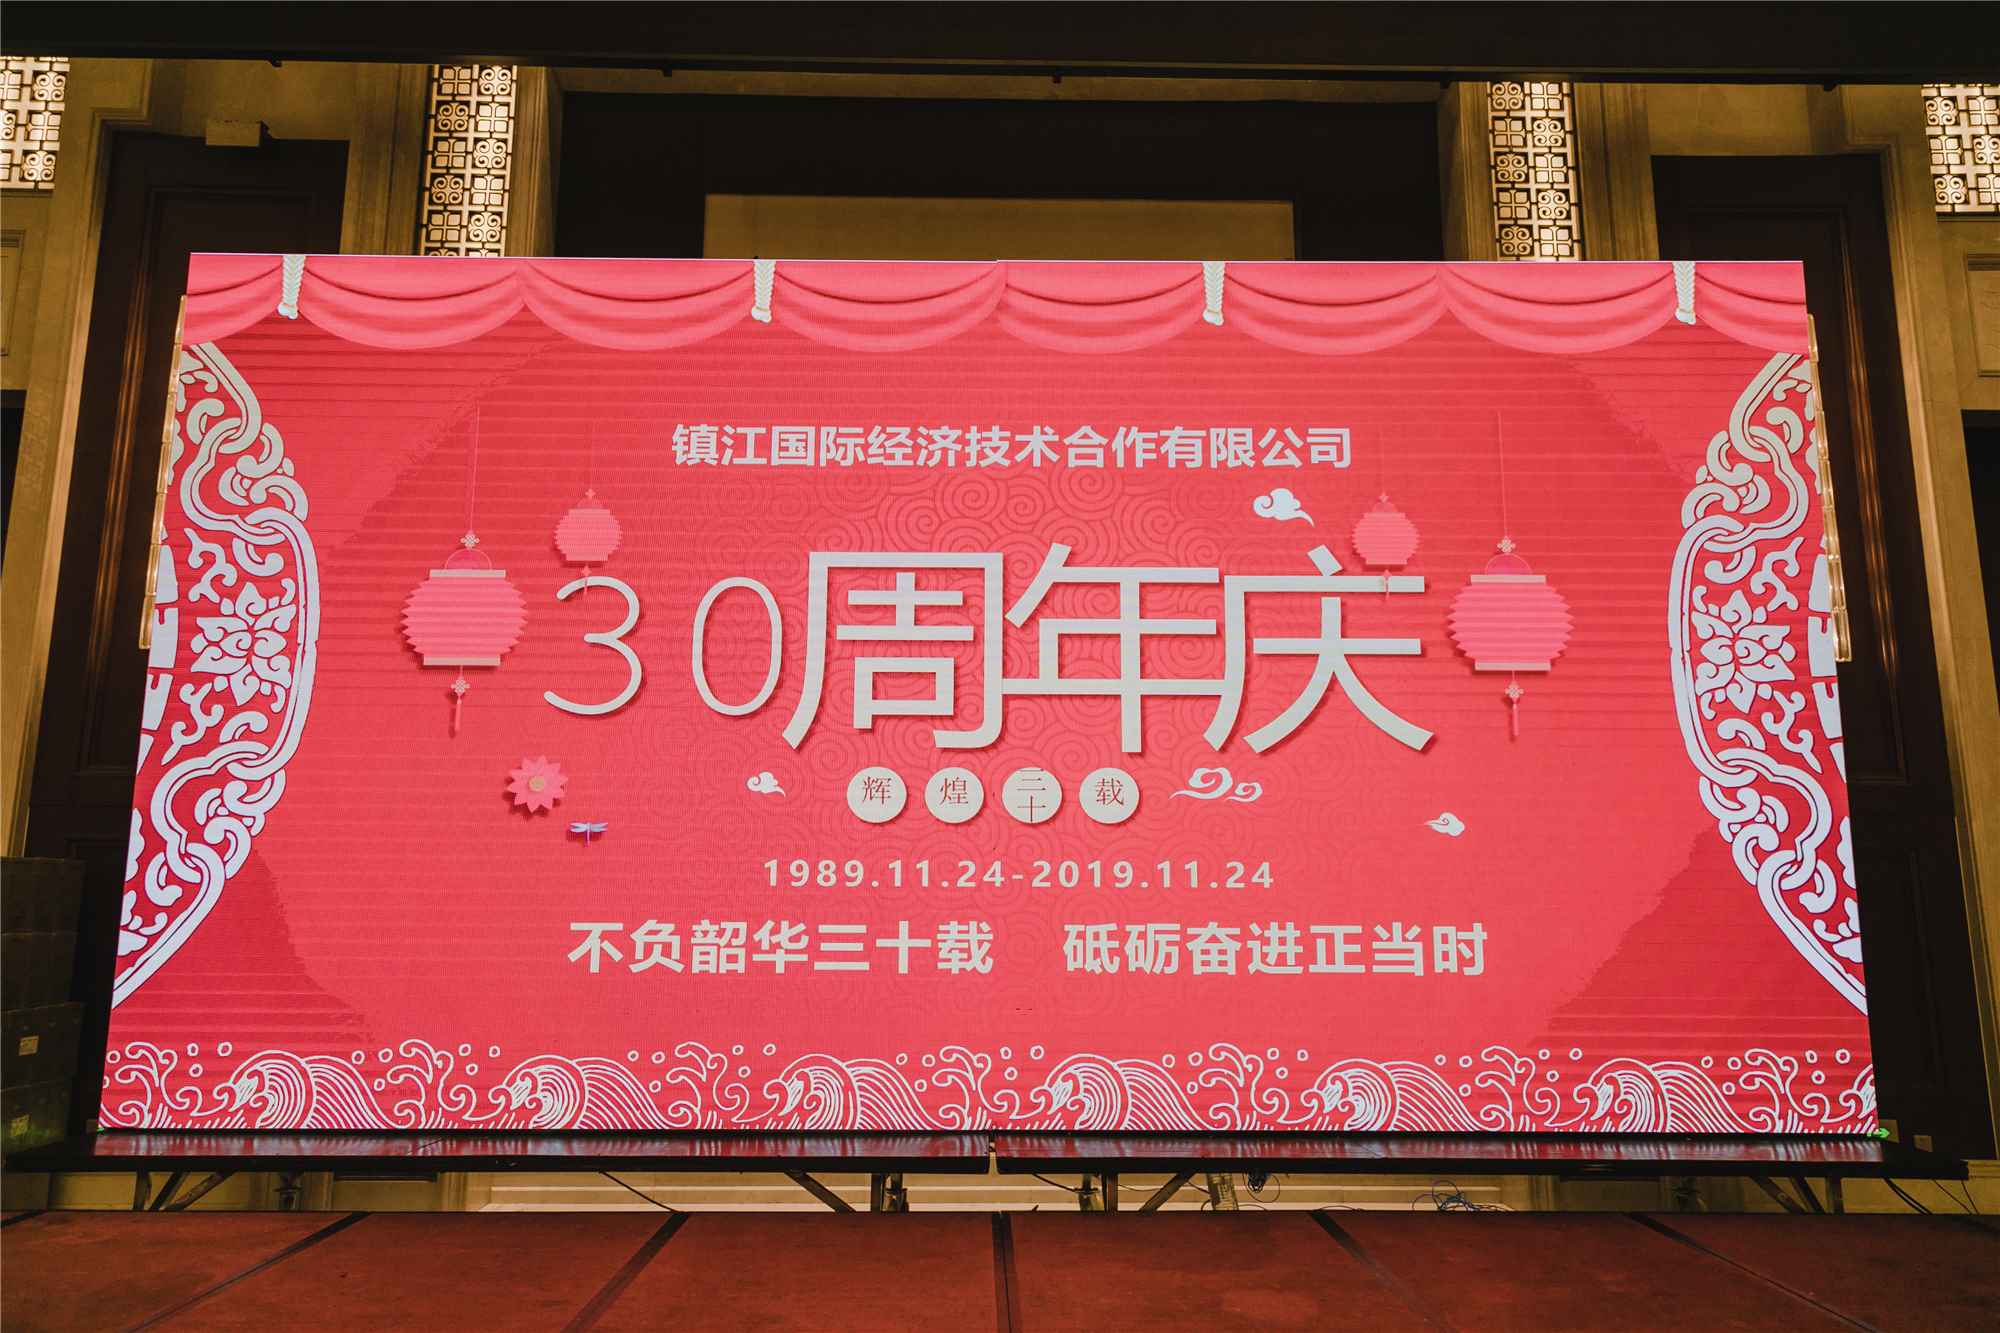 The 30th-anniversary celebration of Zhenjiang International Company (CZICC)